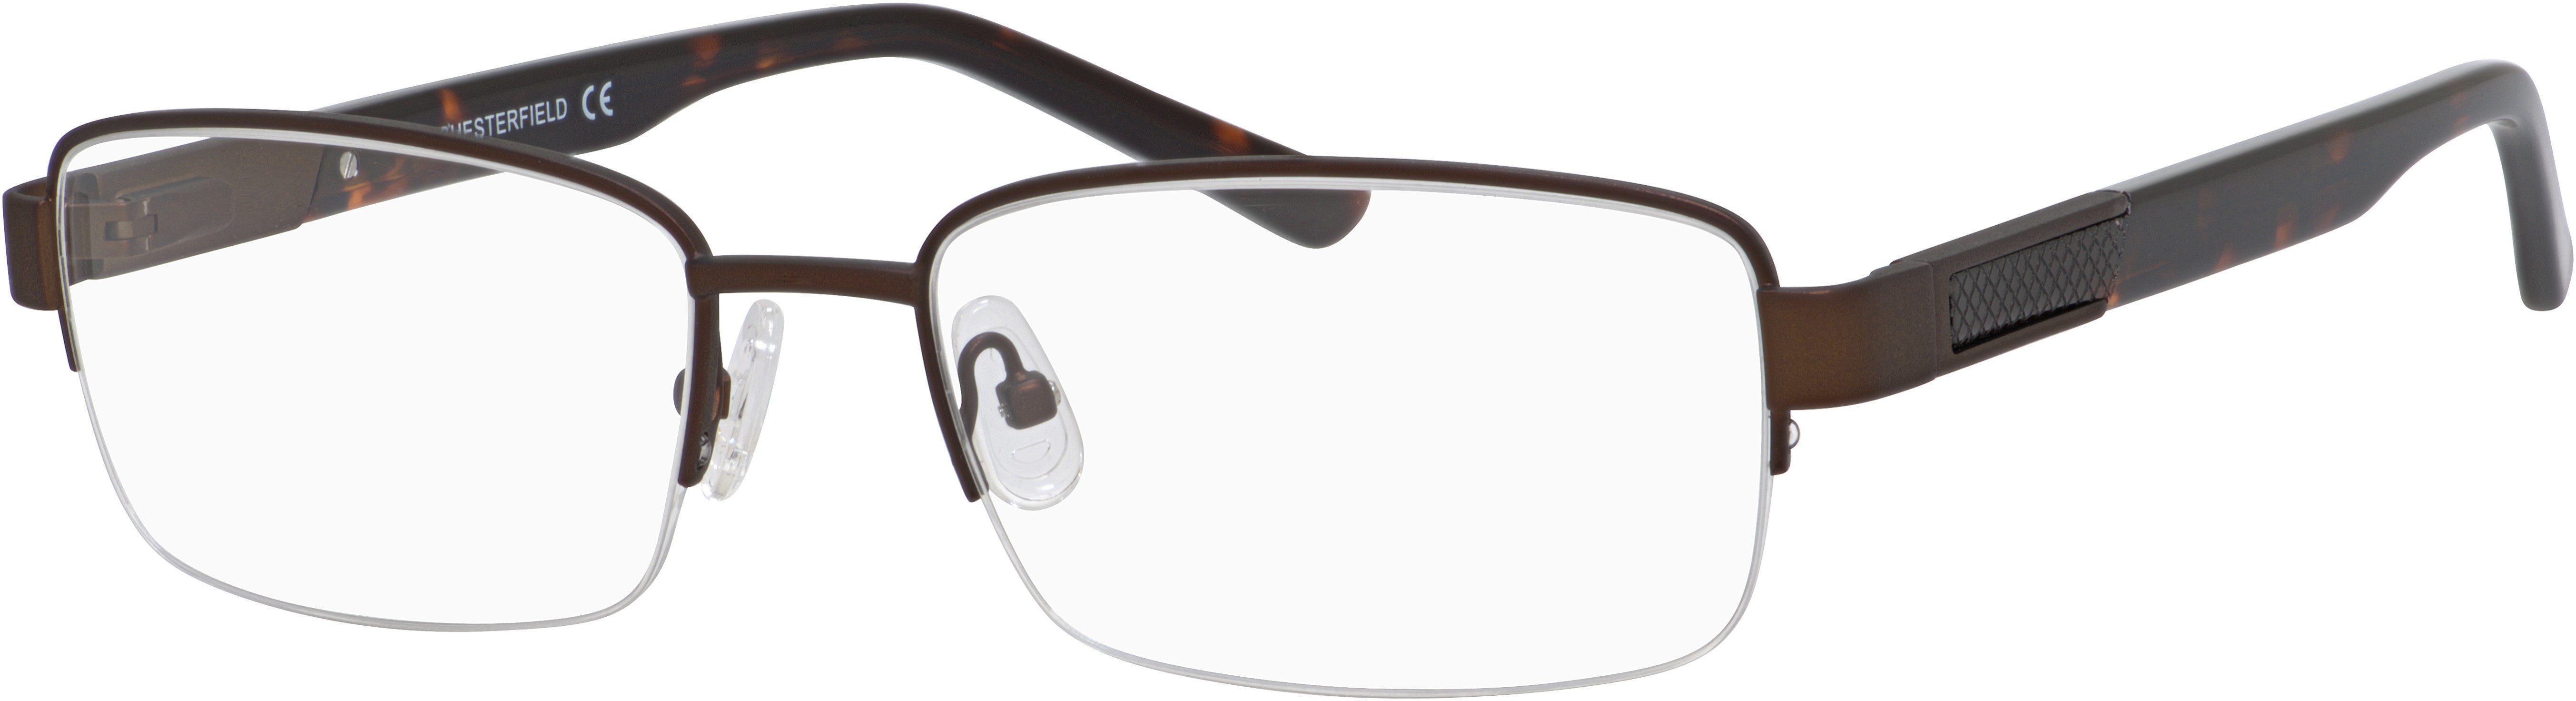  Chesterfield 53XL Rectangular Eyeglasses 0R0Z-0R0Z  Dark Brown (00 Demo Lens)